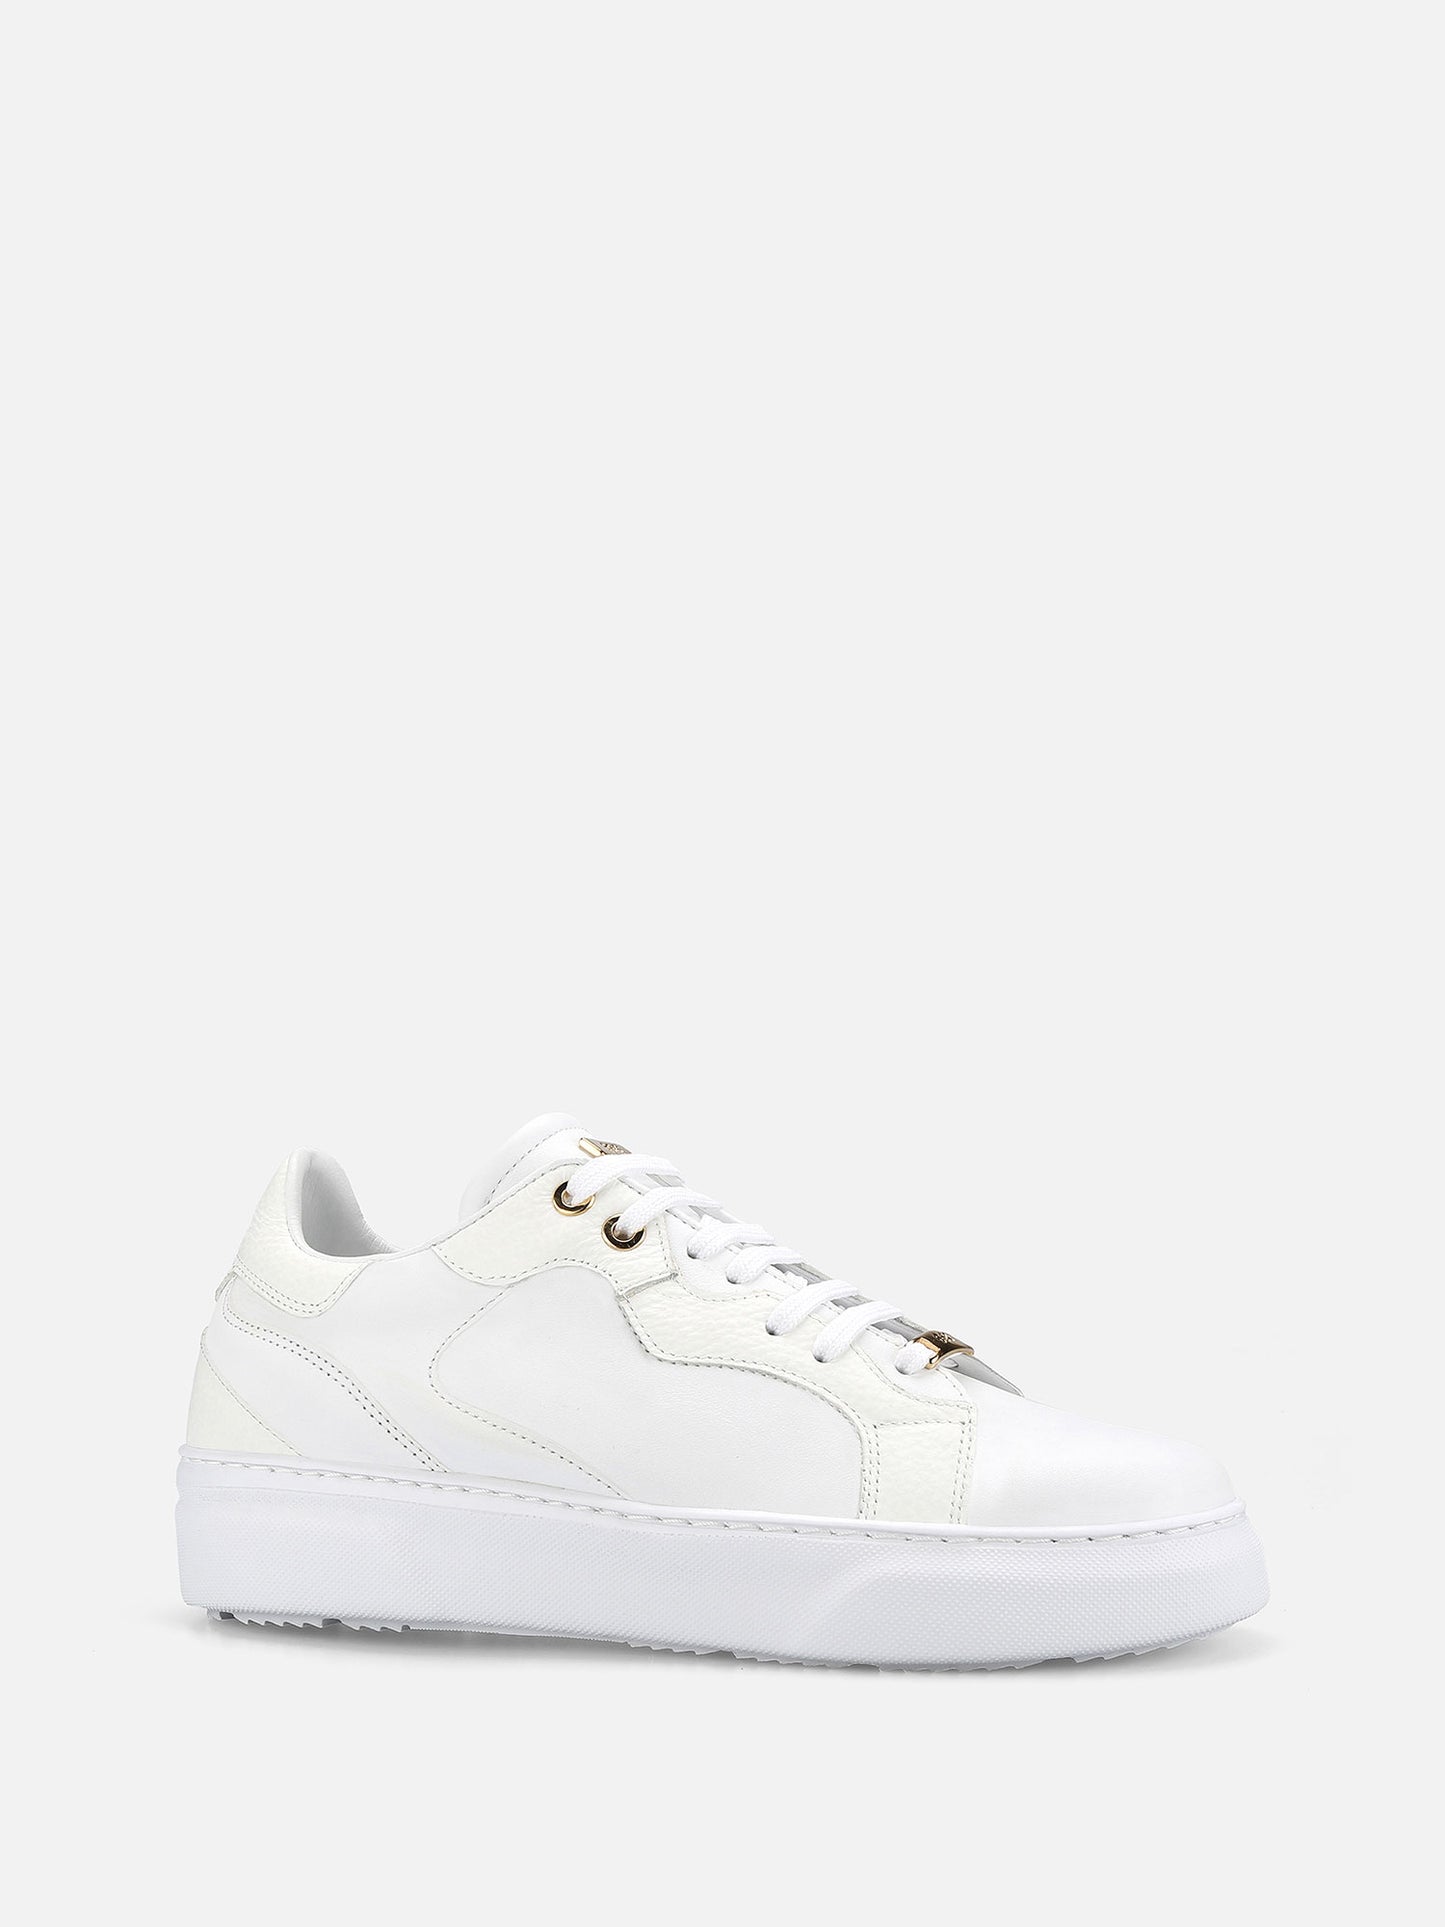 BOTUL Leather Sneakers - White